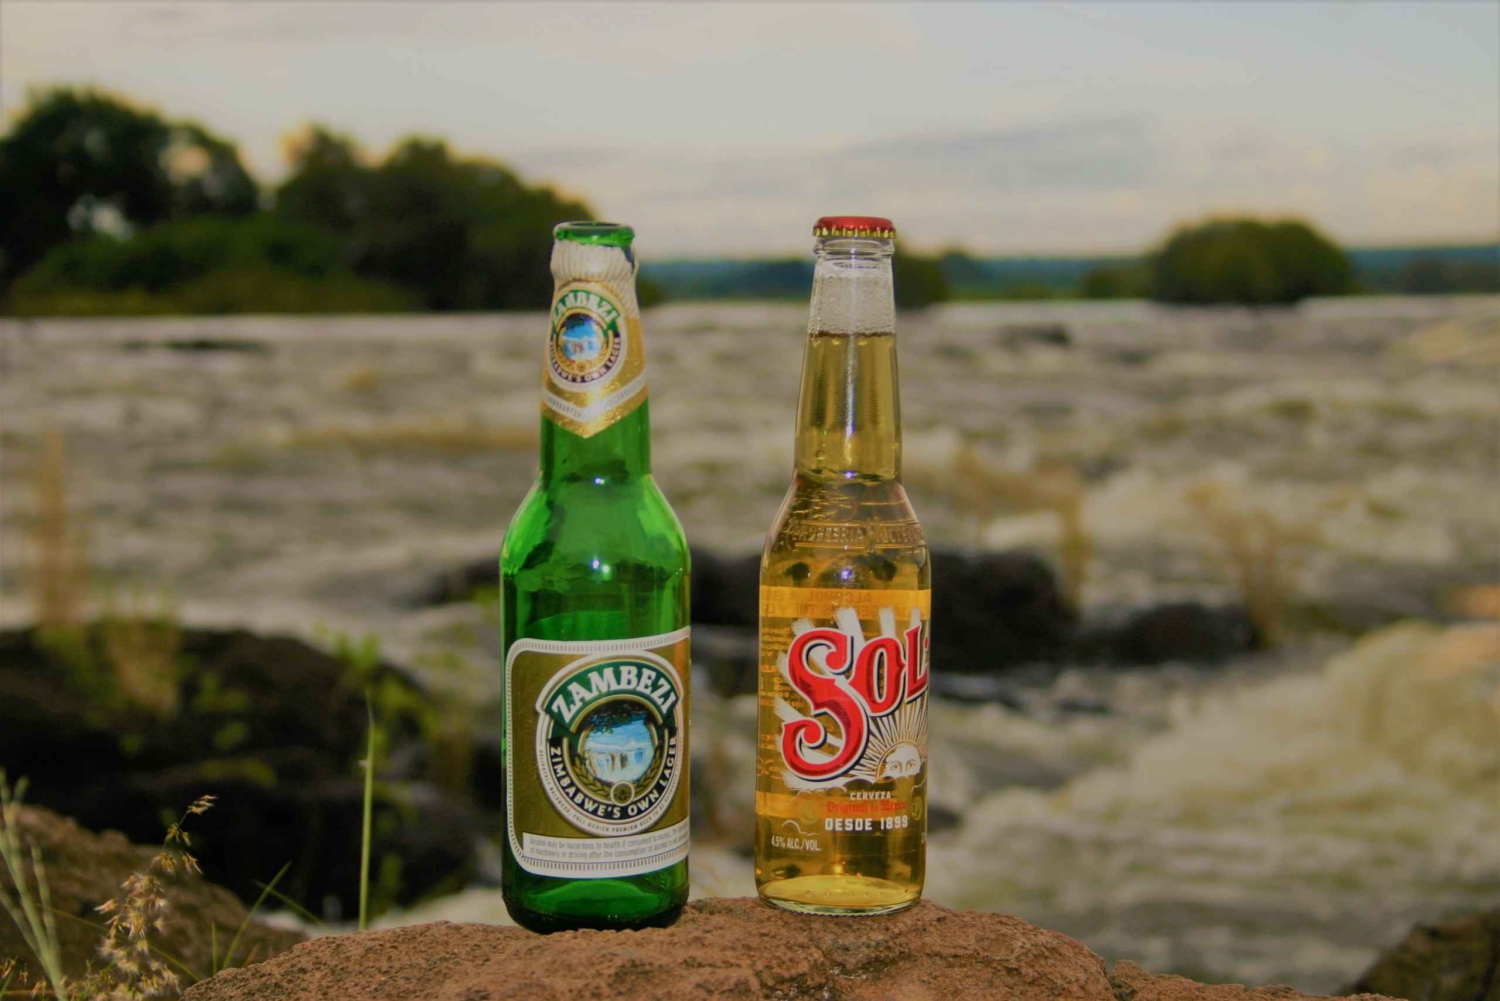 Victoria Falls : Safari au restaurant avec dégustation